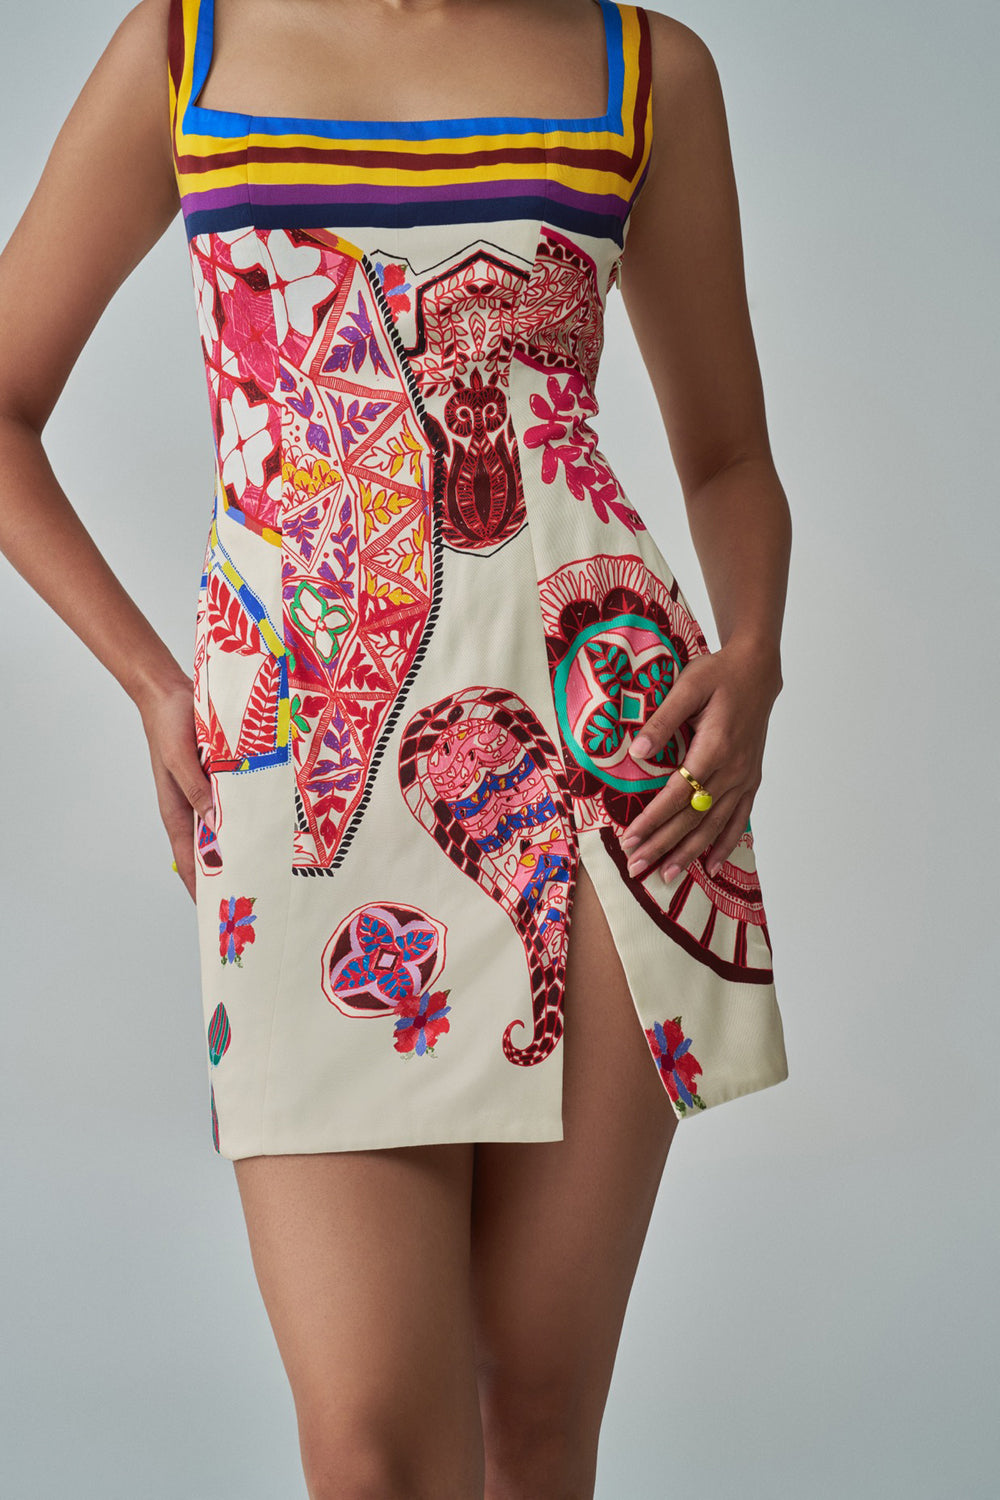 Megan Paisley Print Dress